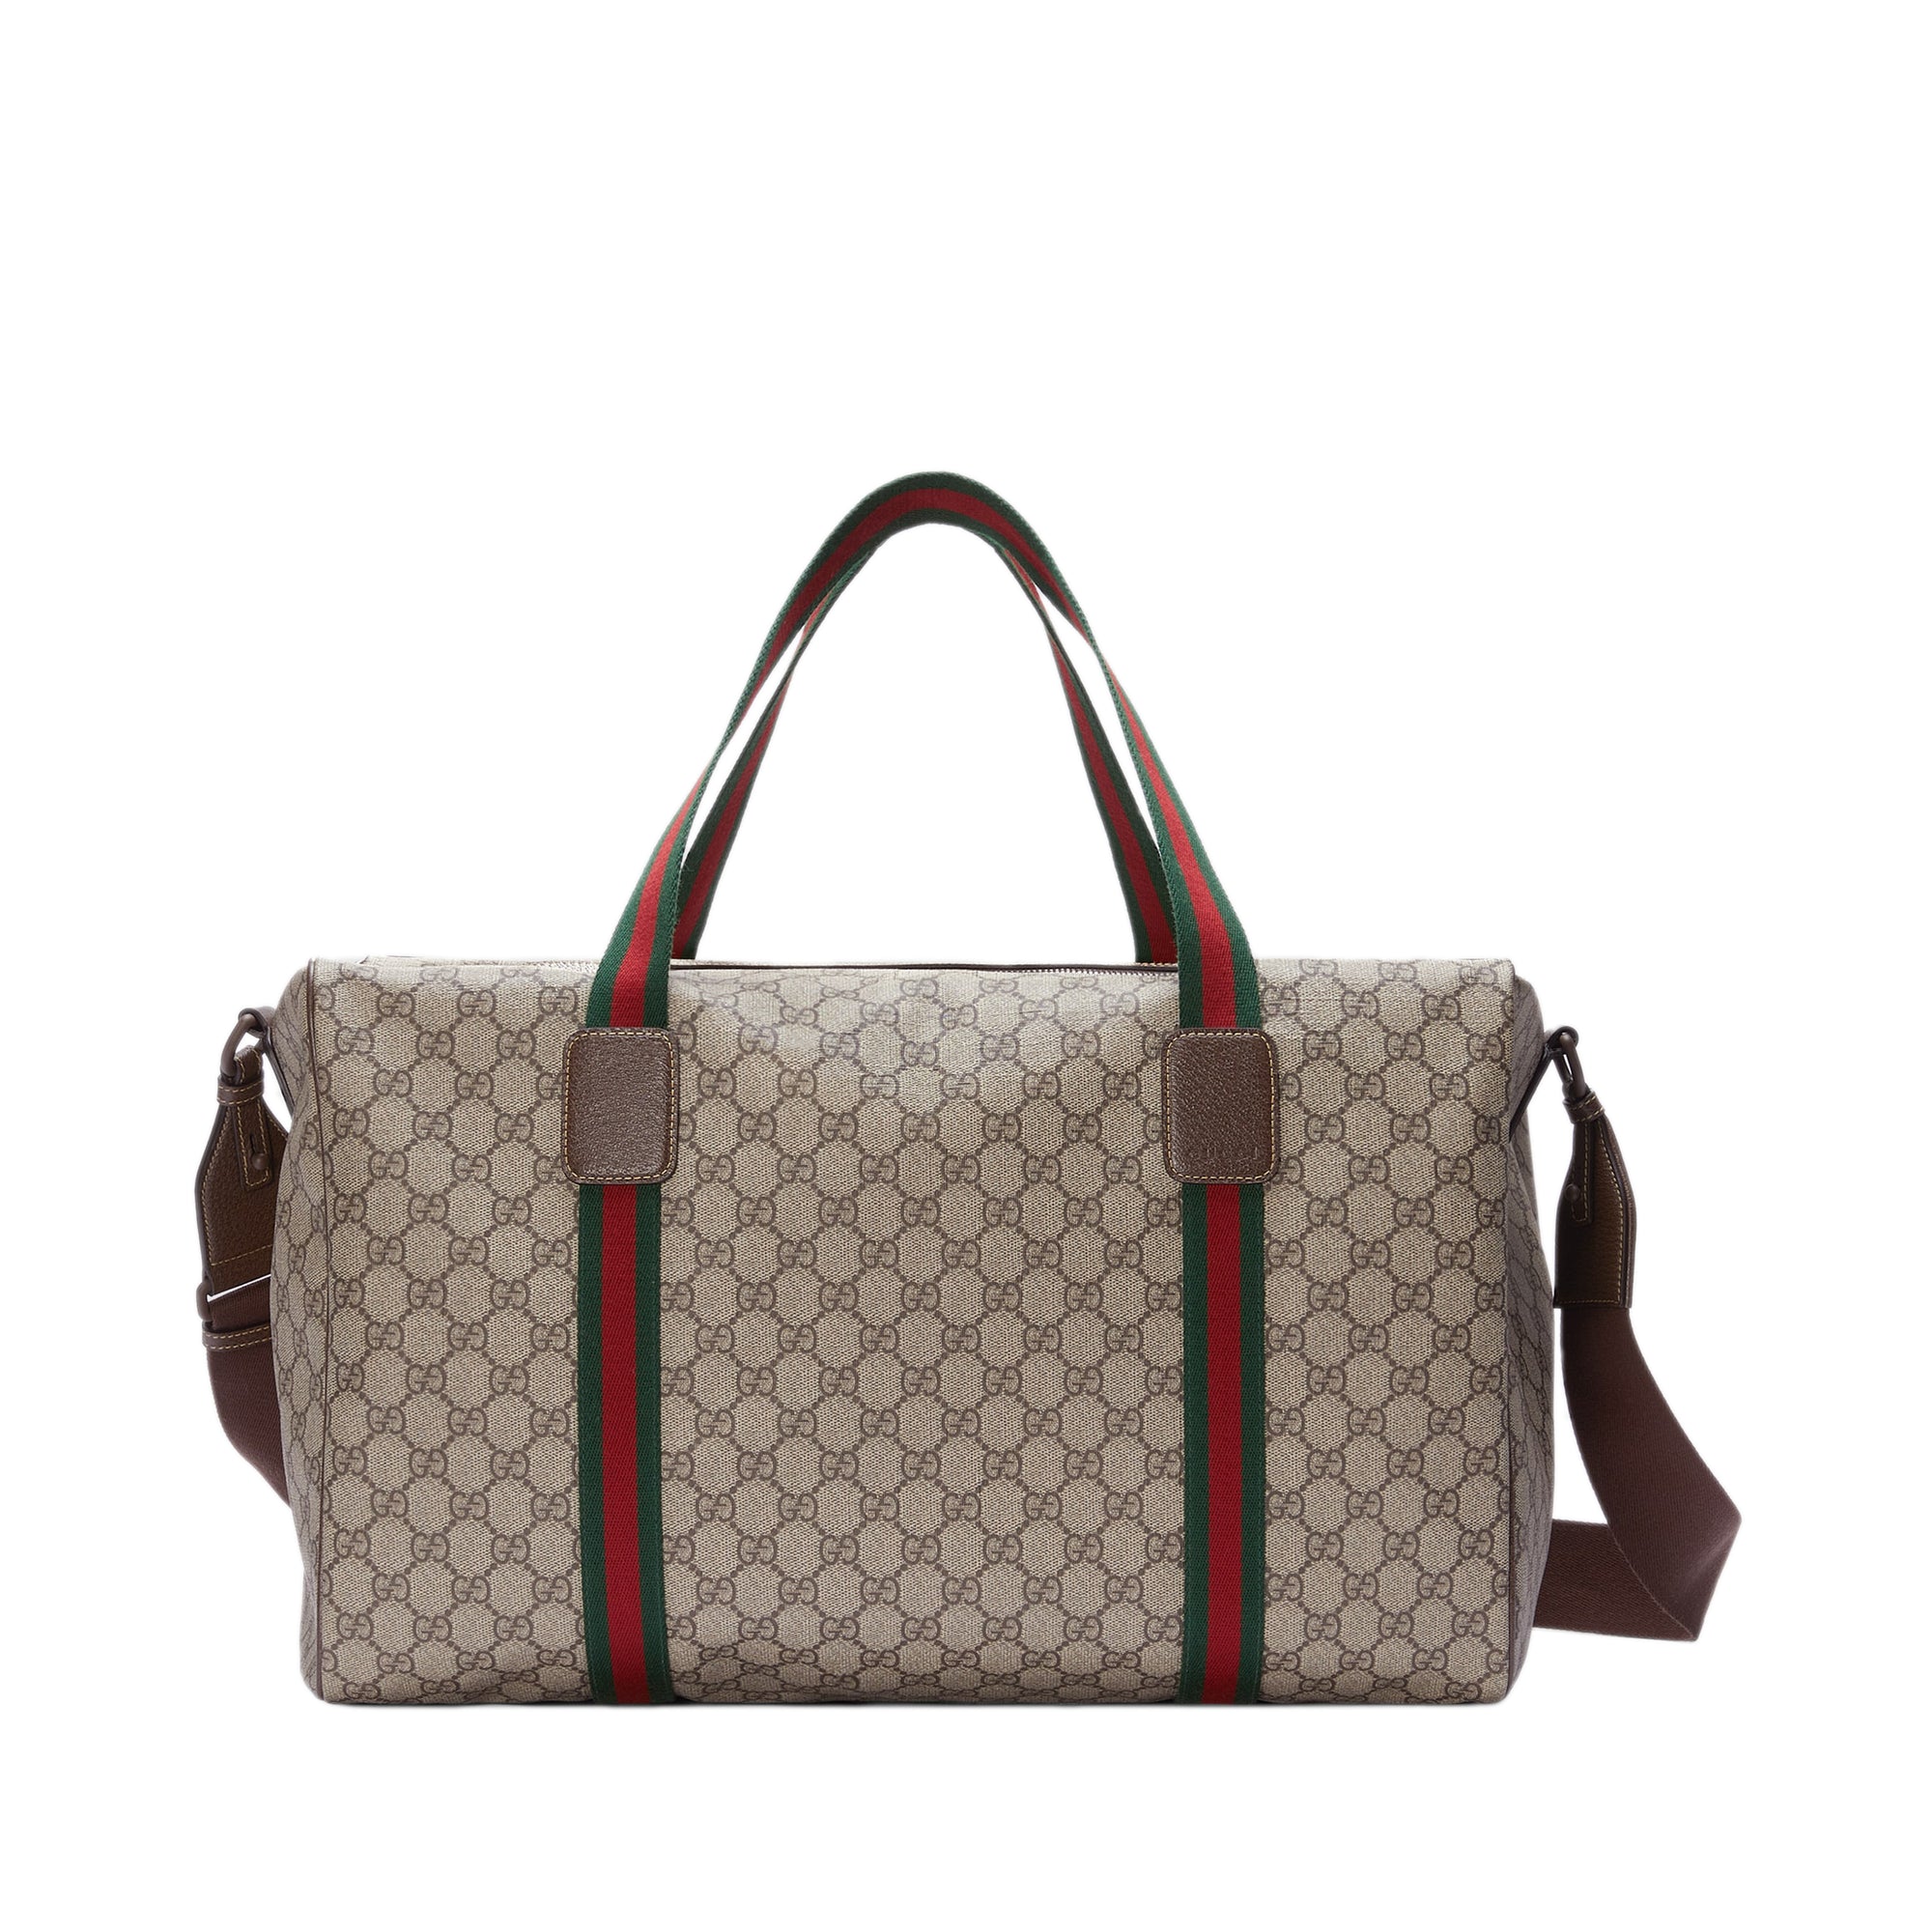 Gucci - Men’s Large Duffle Bag With Web - (Beige/Ebony) view 1